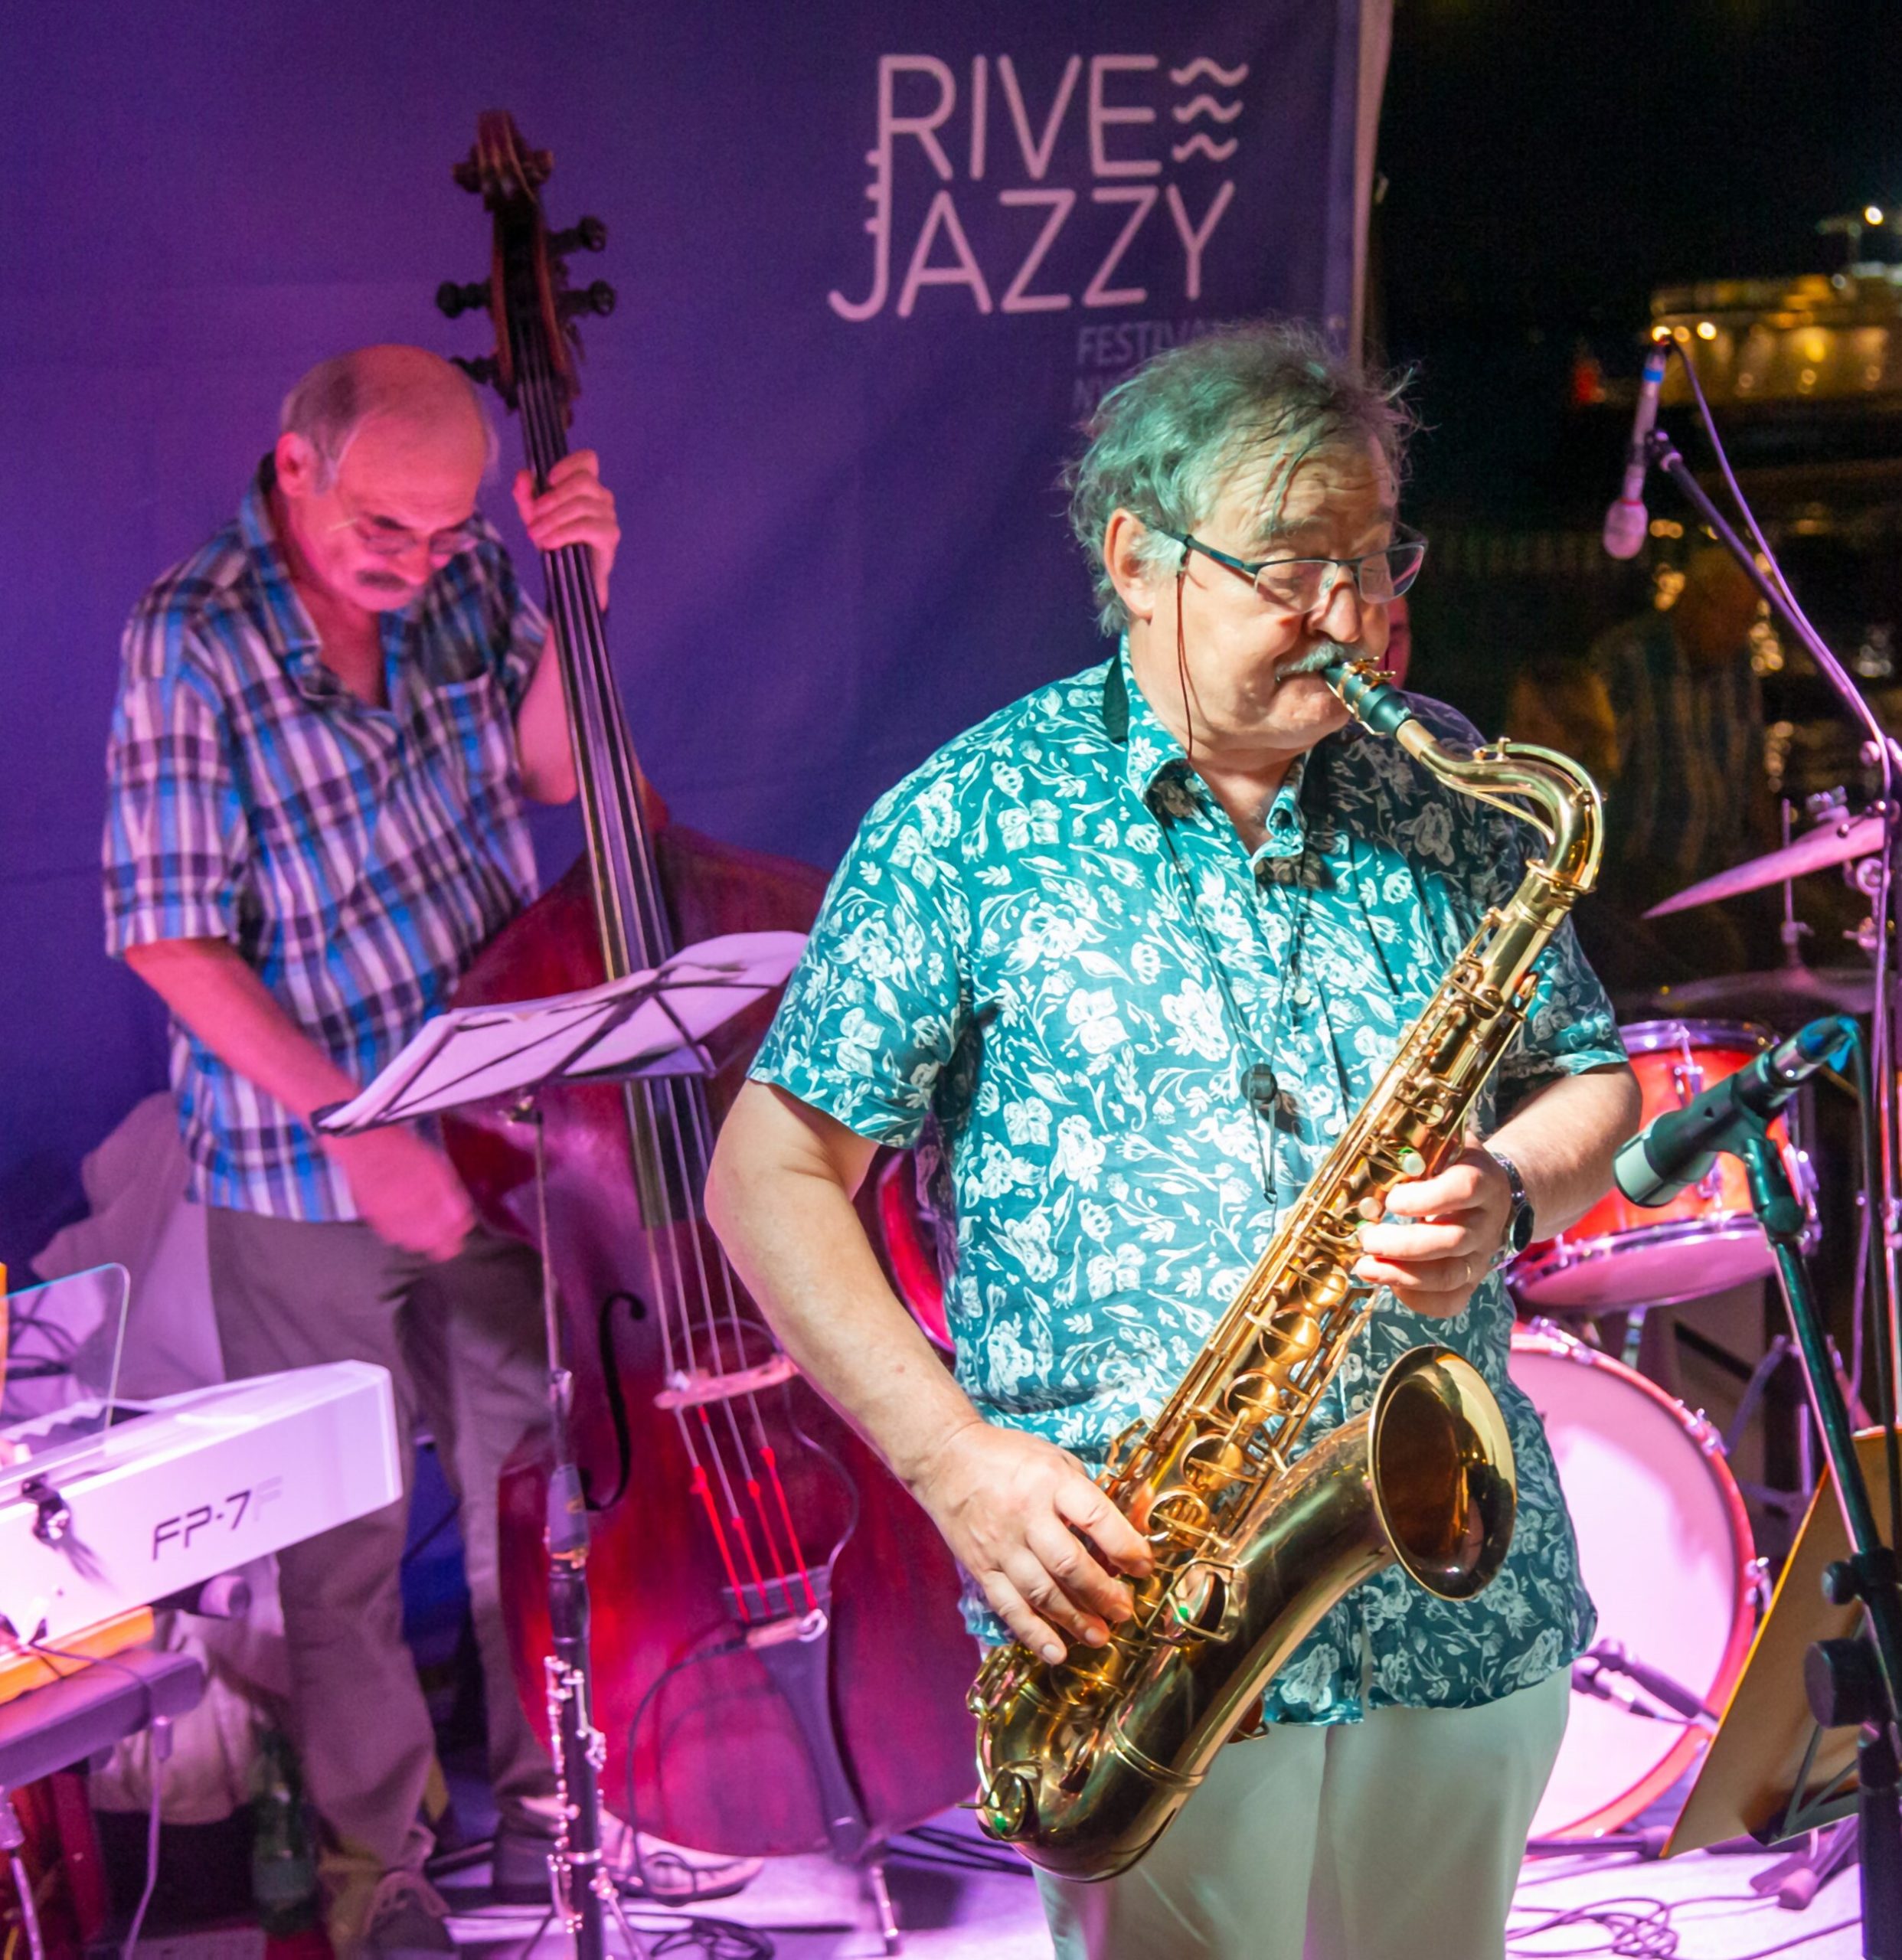 Rive Jazzy Festival